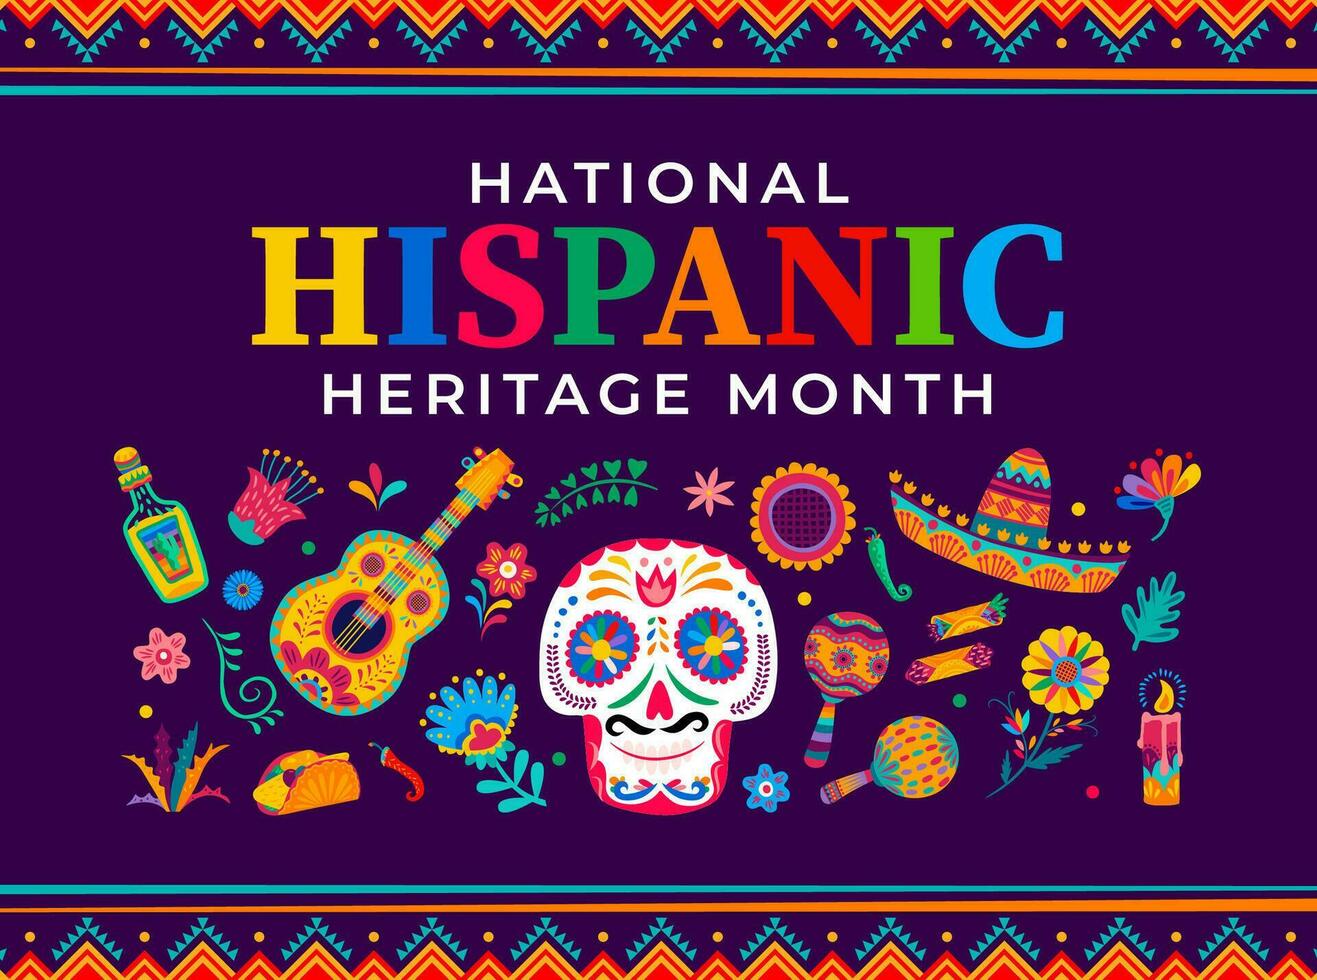 Calavera skull, flower on hispanic heritage banner vector